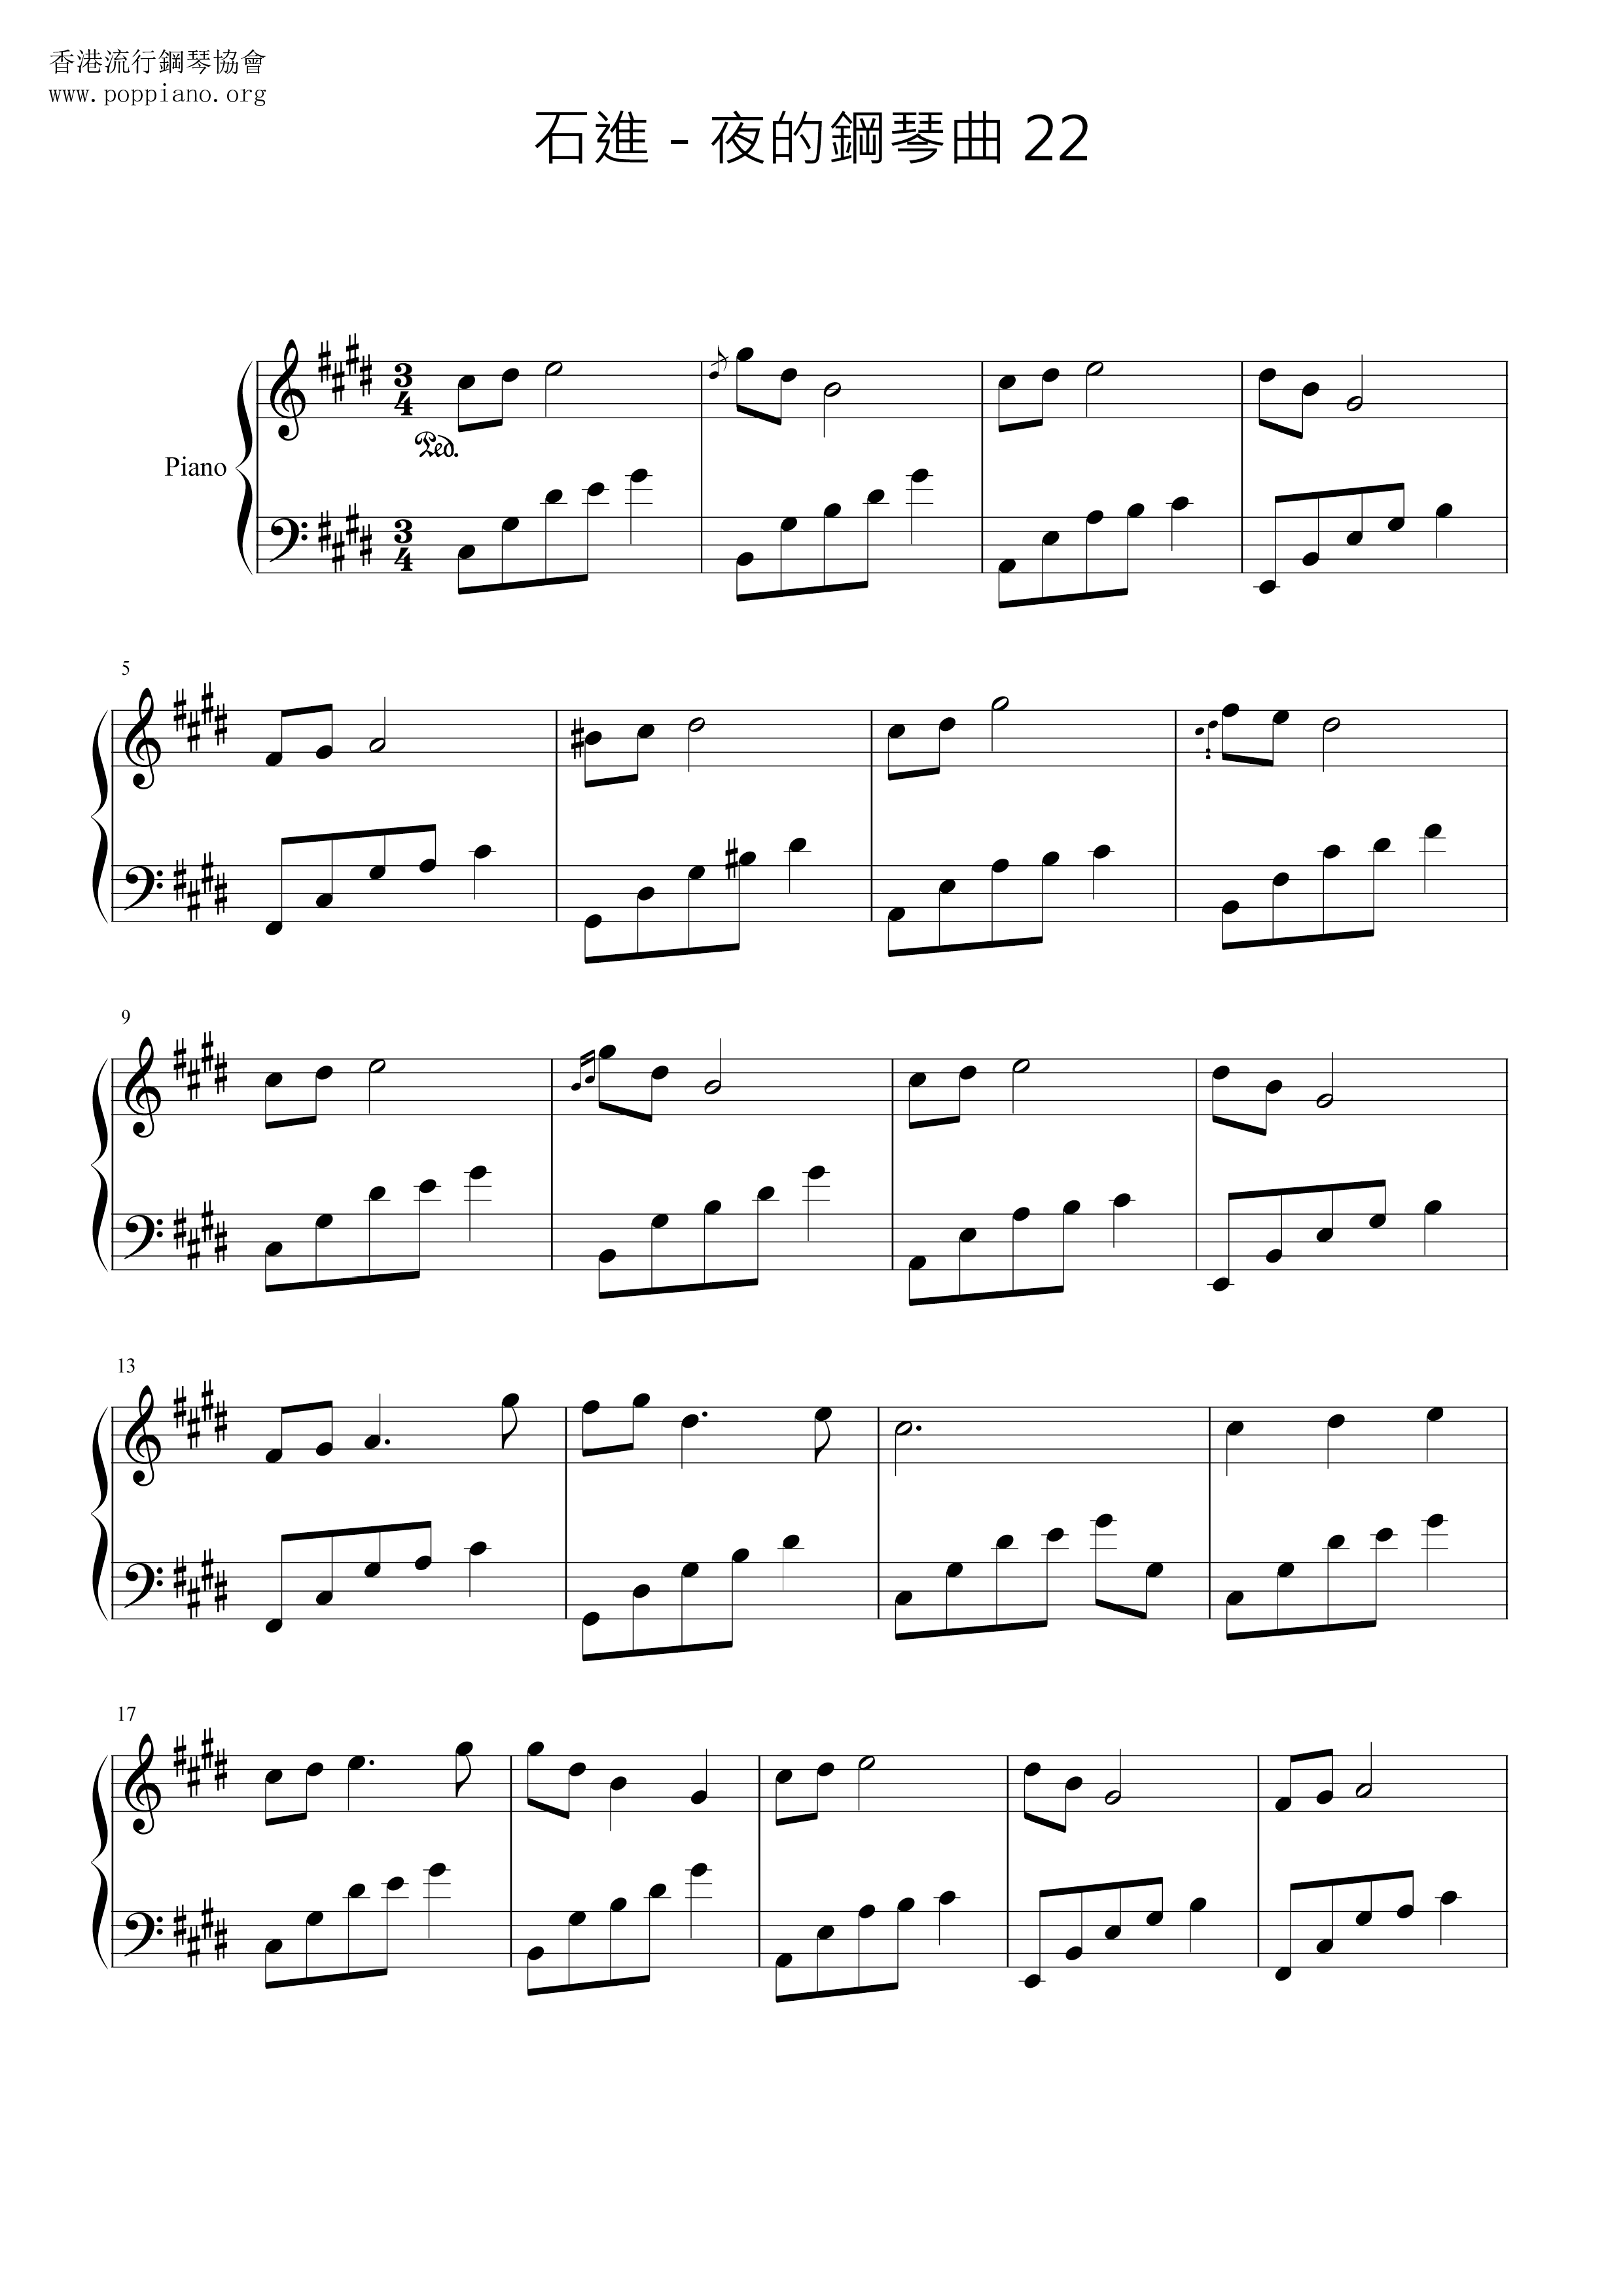 Melody Of The Night 22 Score